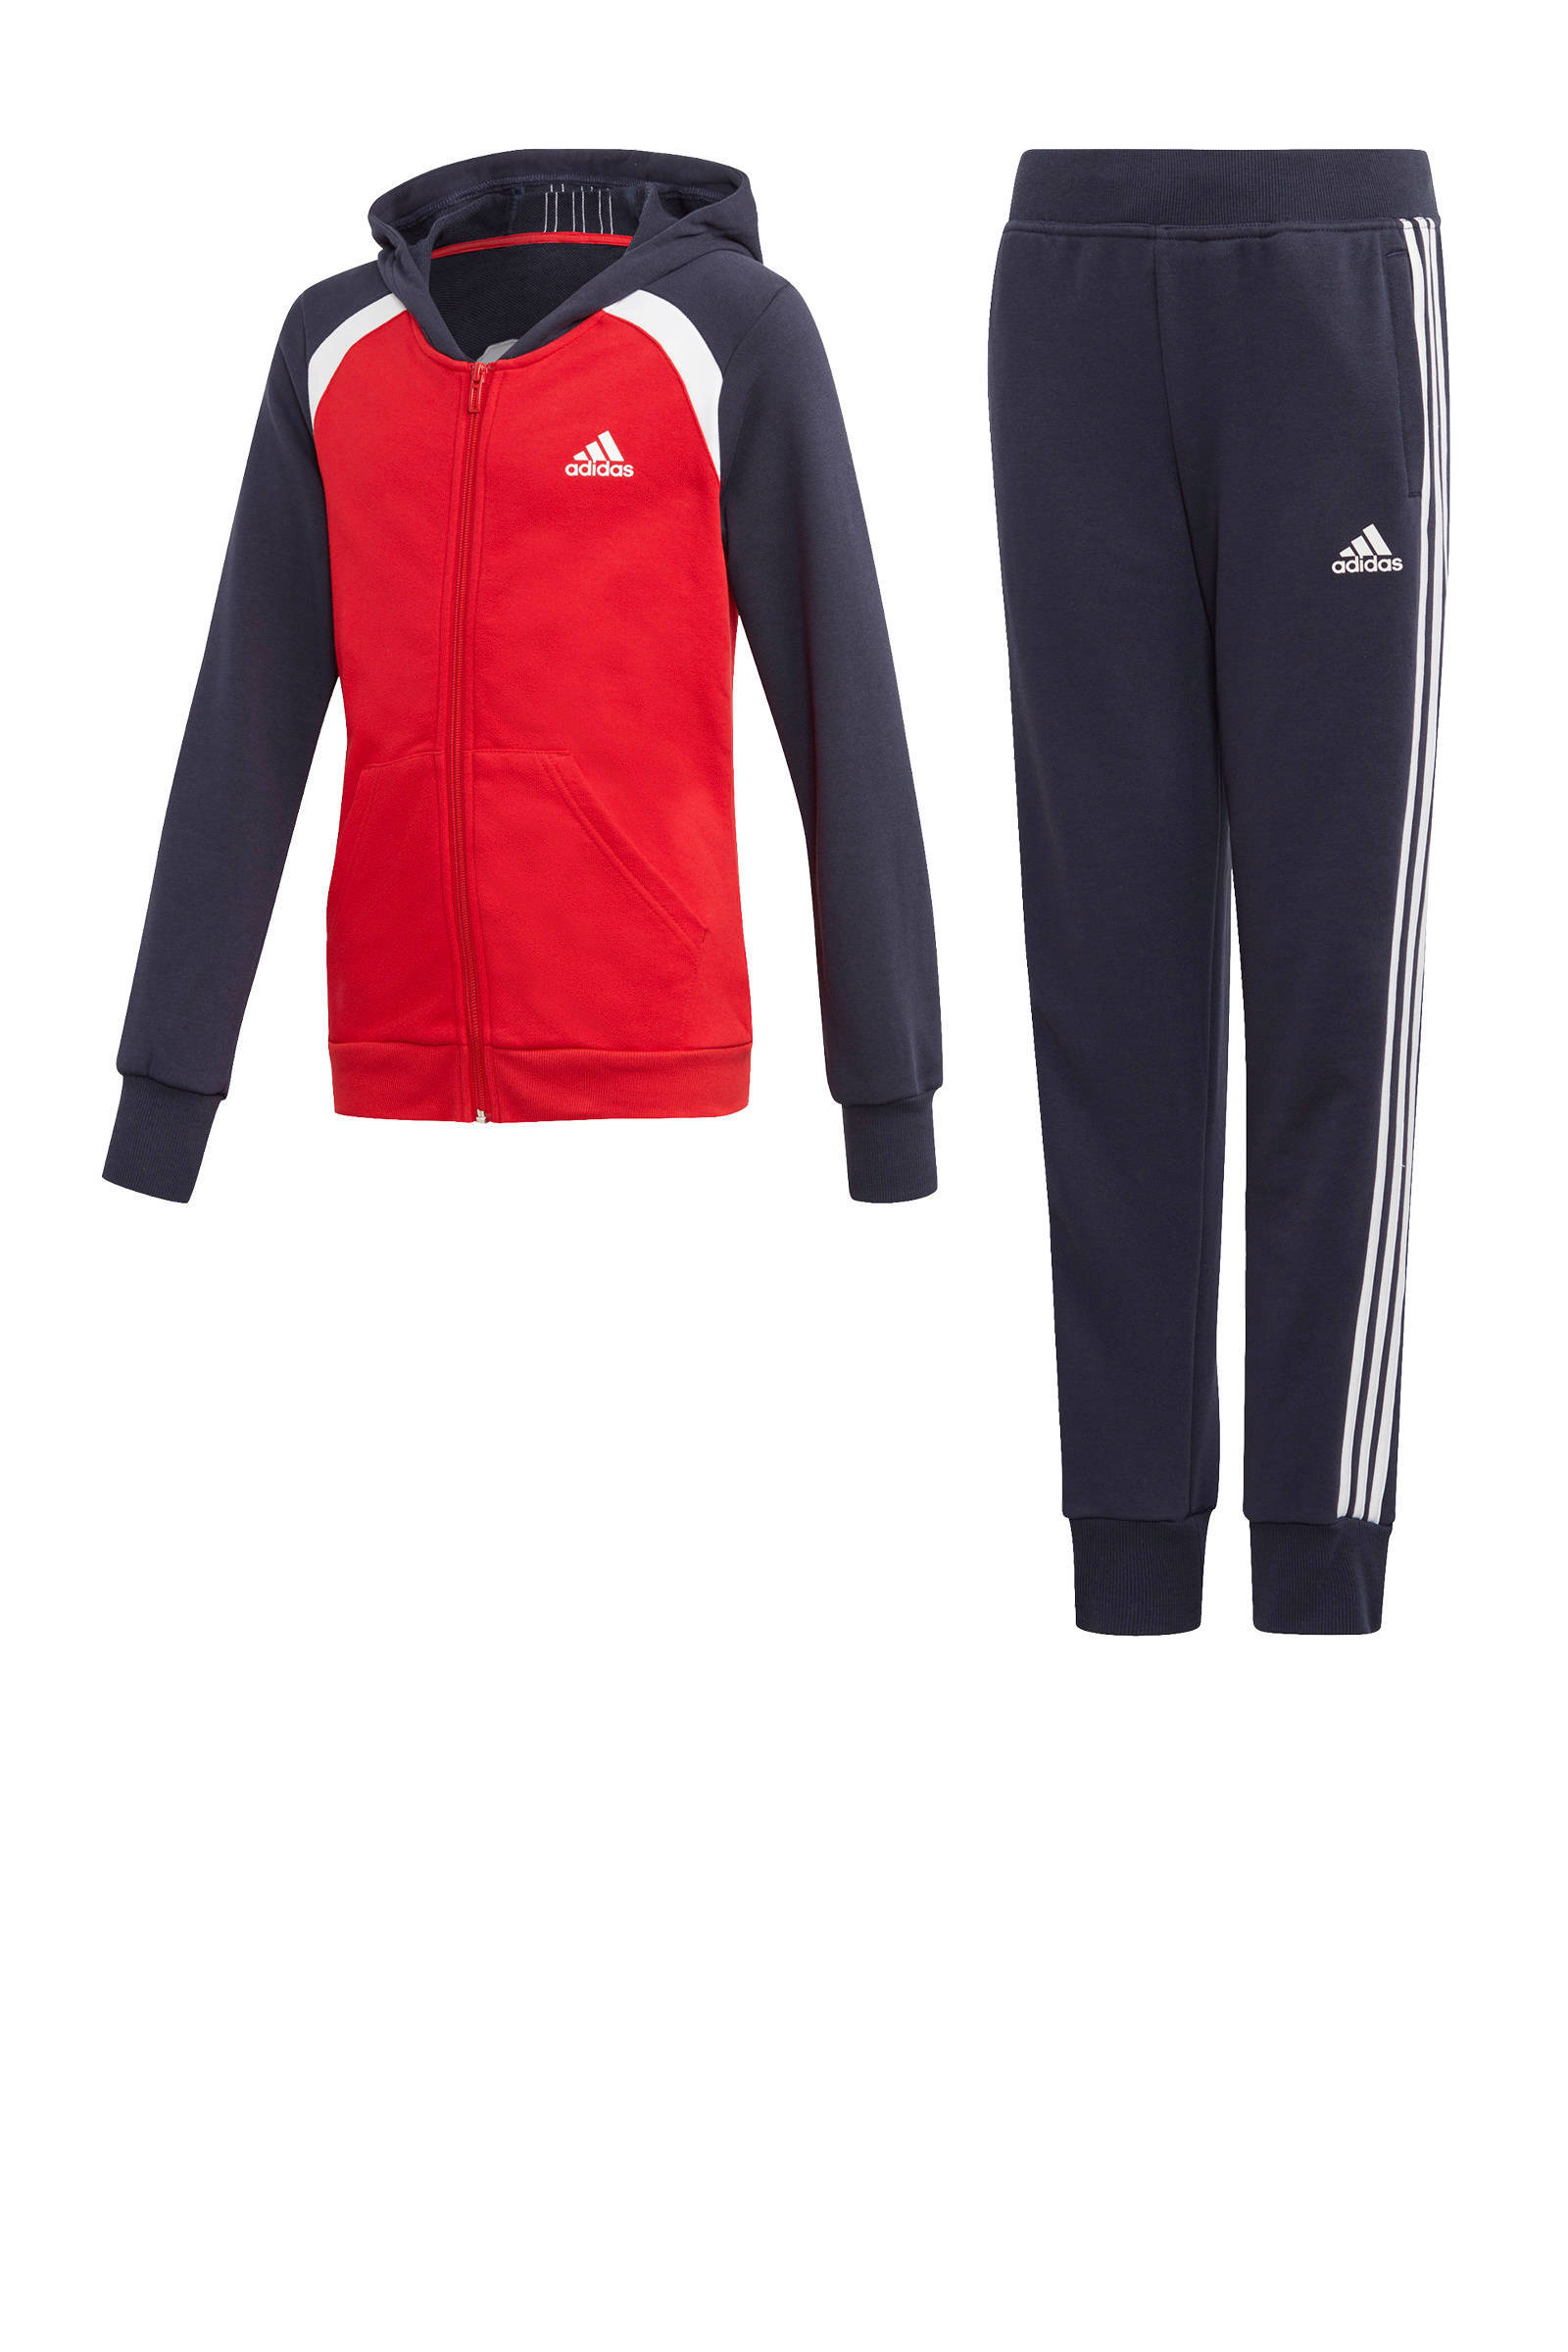 Adidas Performance trainingspak donkerblauw/rood online kopen